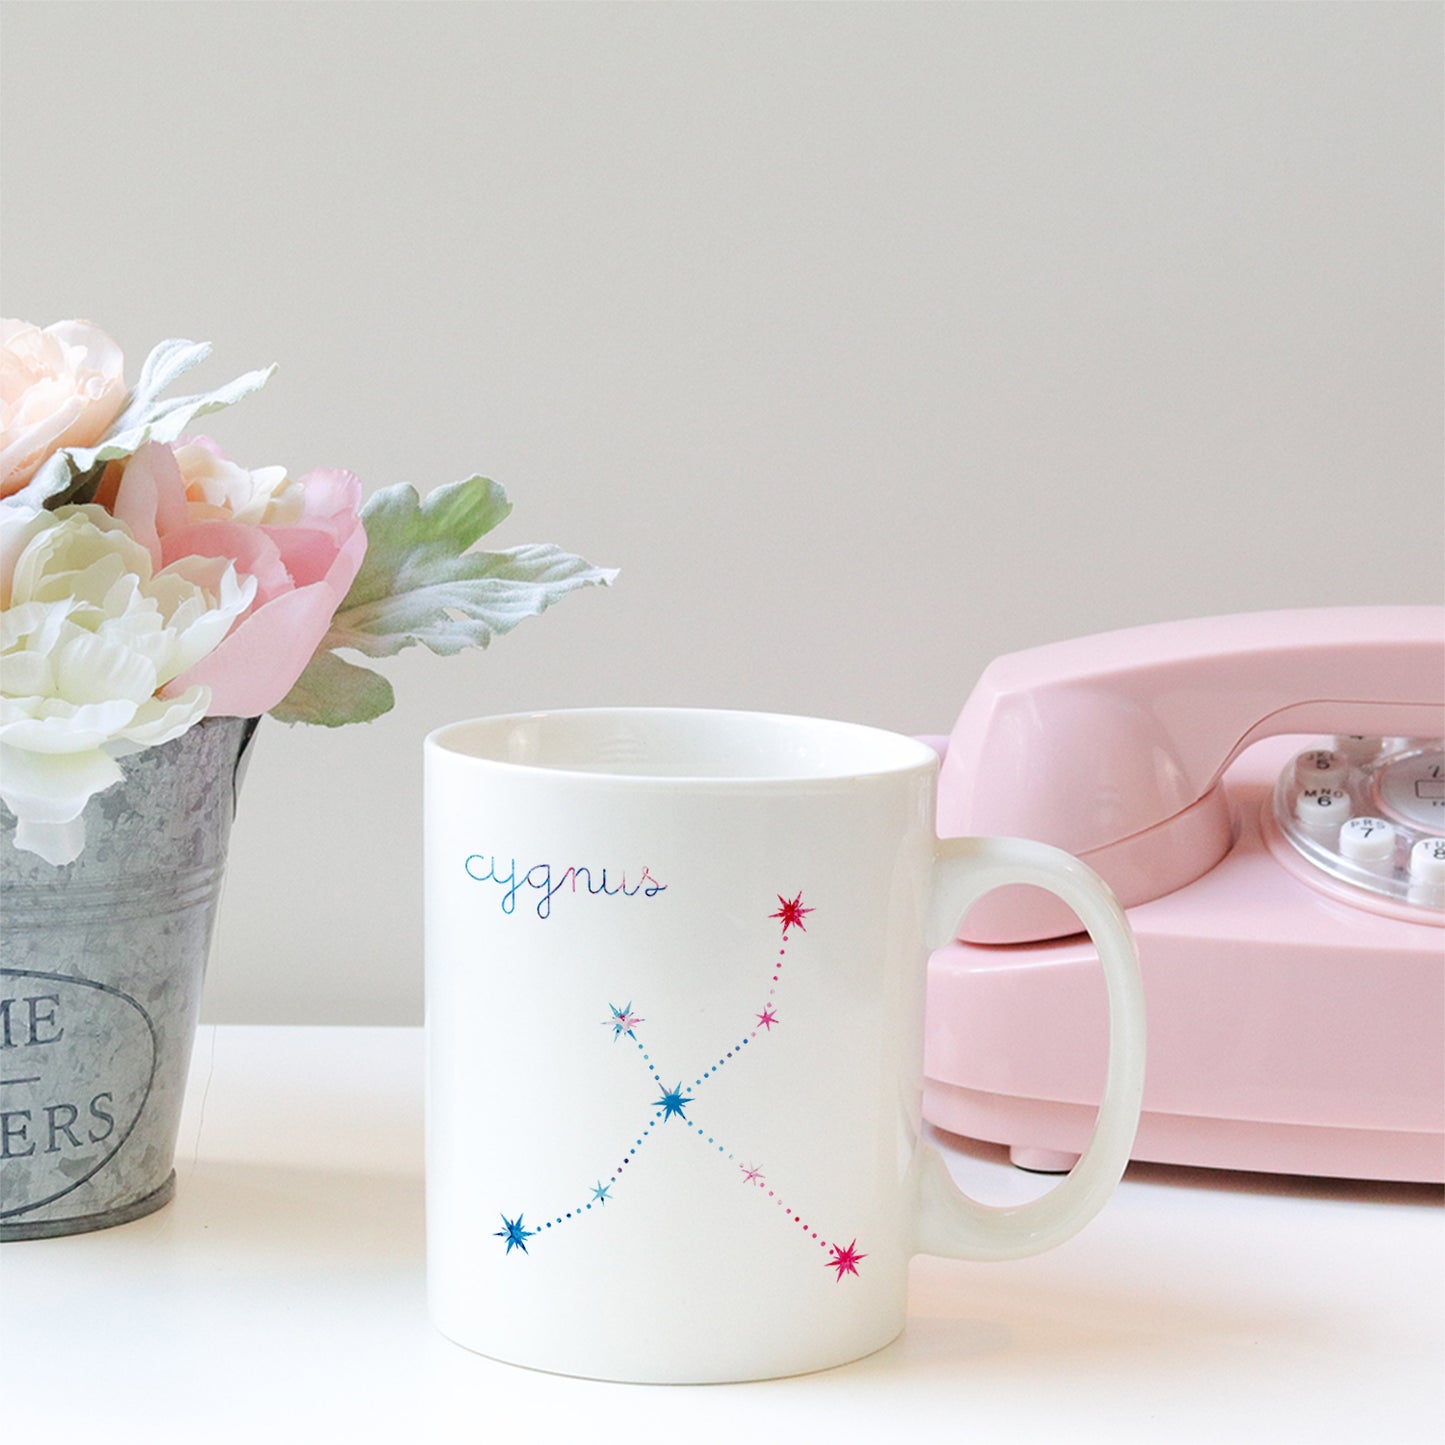 Cygnus constellation | Ceramic mug